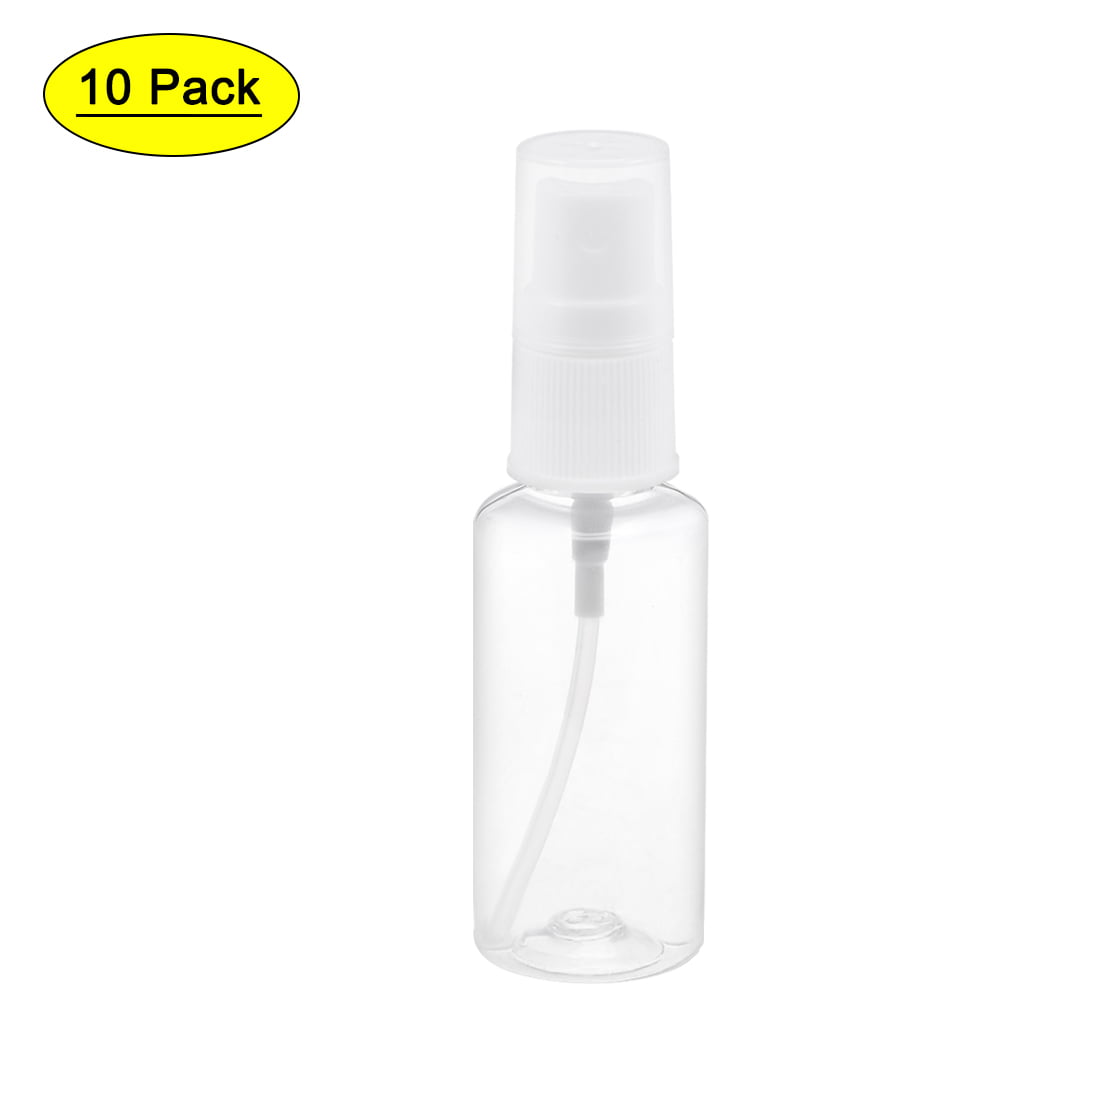 Equate Continuous Spray Bottle, 10 Fl oz